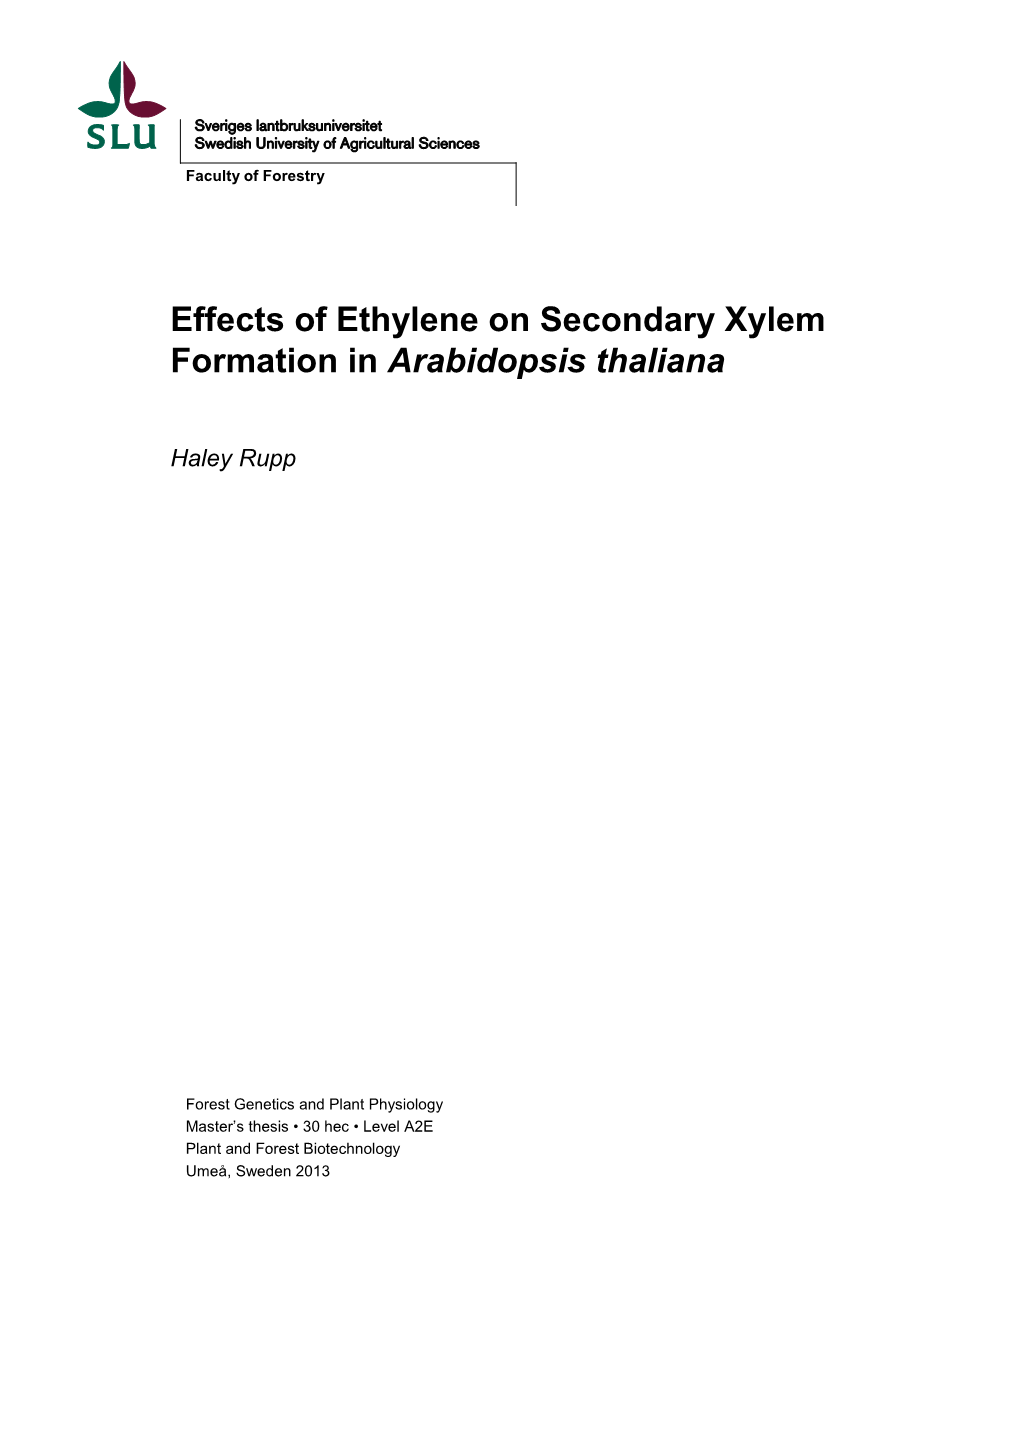 Effects of Ethylene on Secondary Xylem Formation in Arabidopsis Thaliana